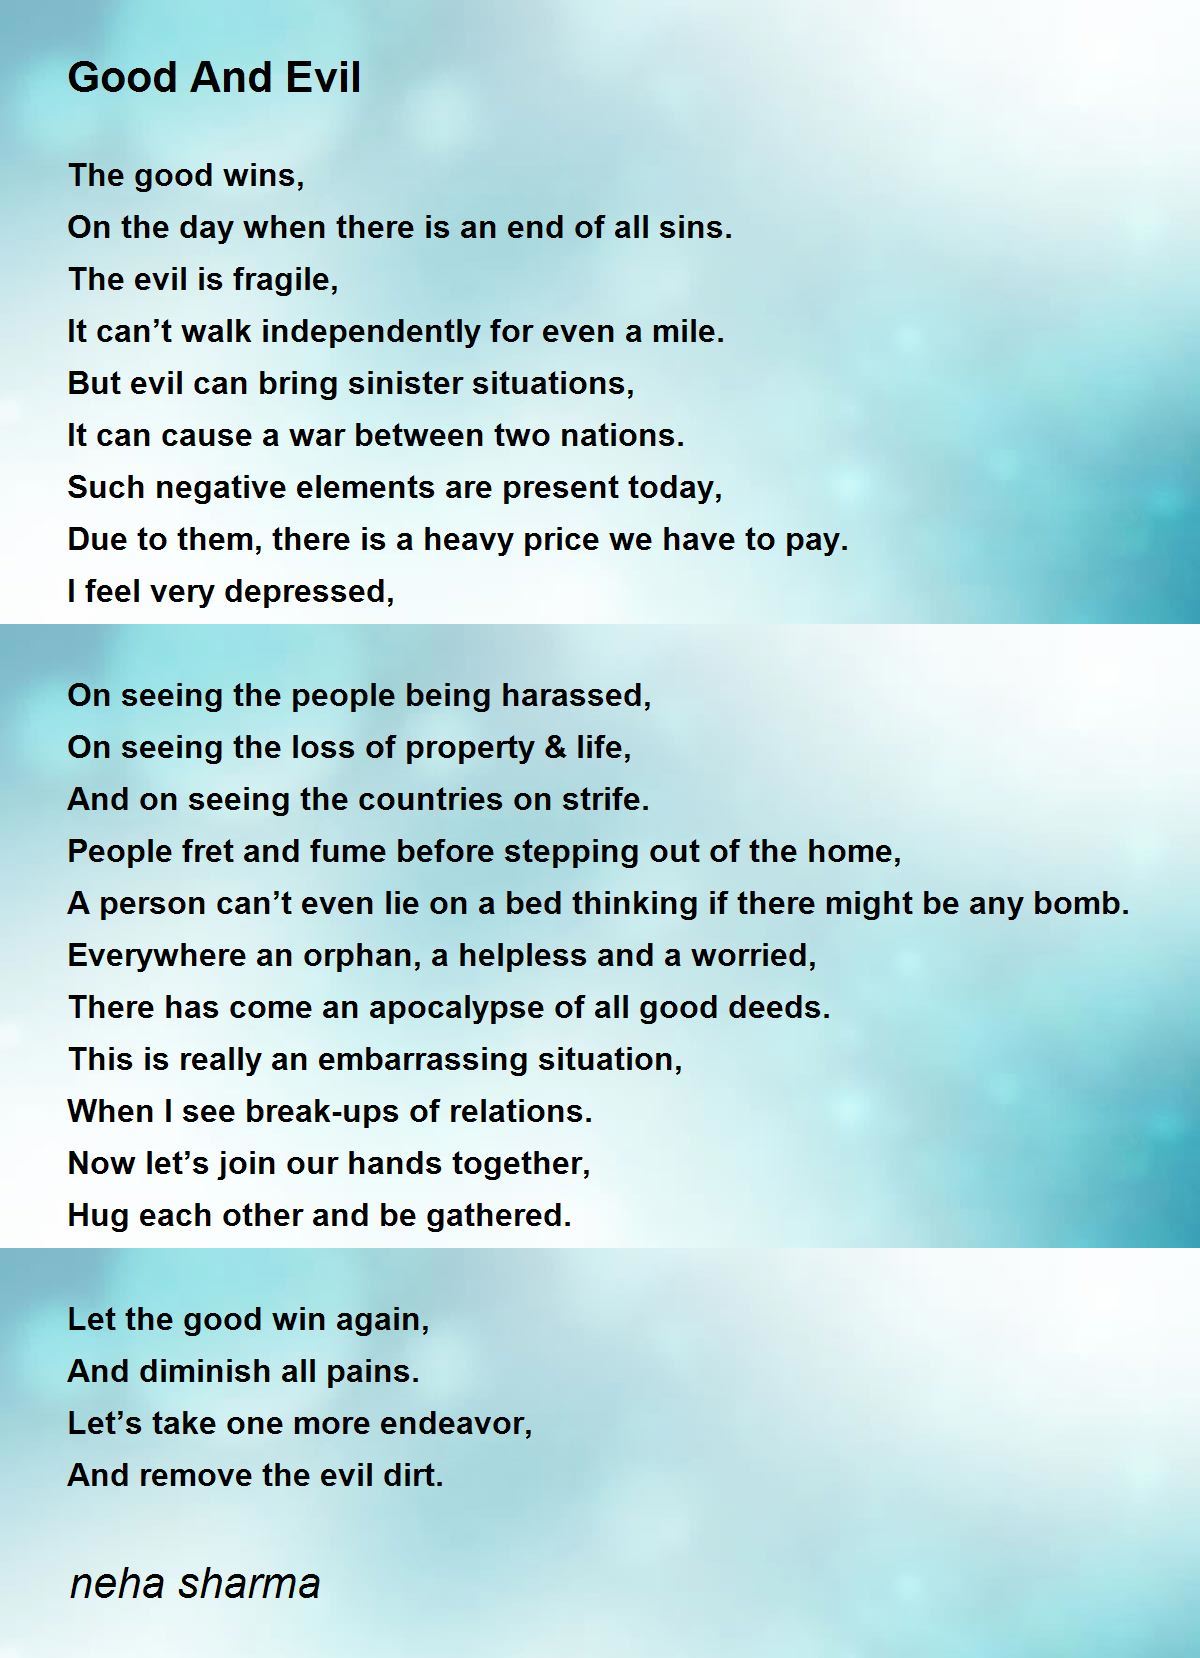 Good And Evil Poem By Neha Sharma